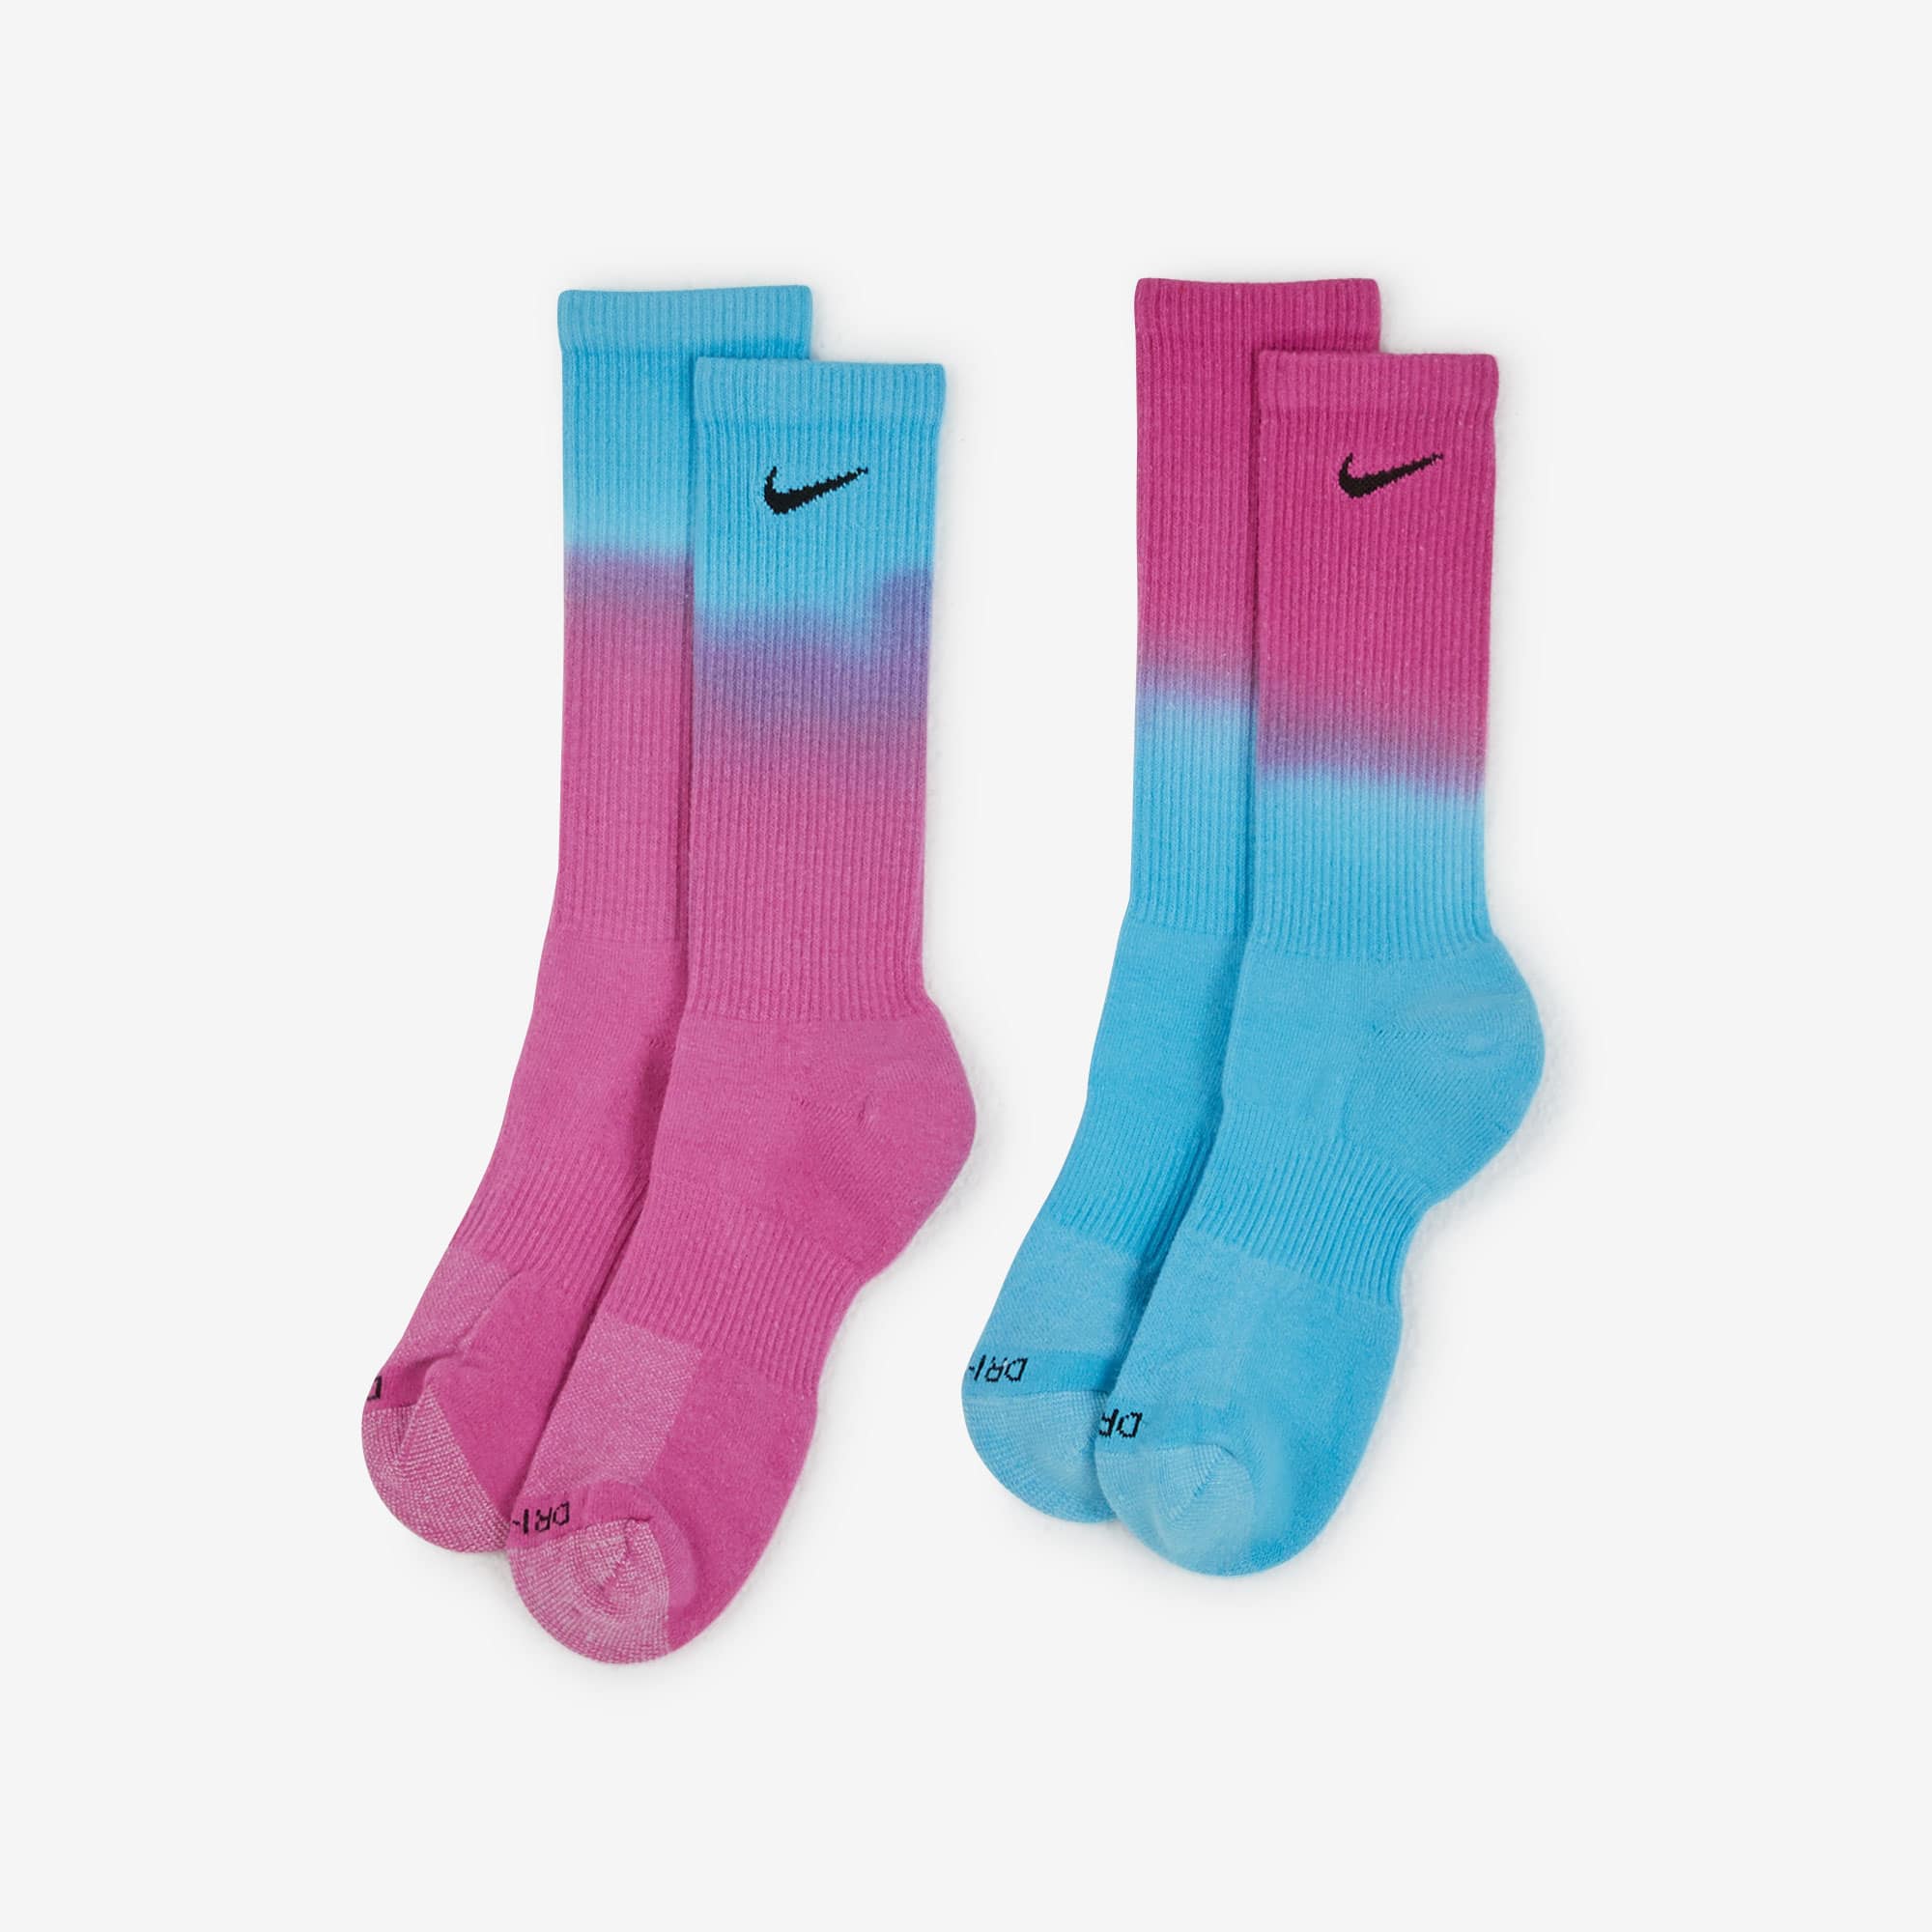 Chaussettes Nike Tie & Dye - Sky blue – luniversdebetty